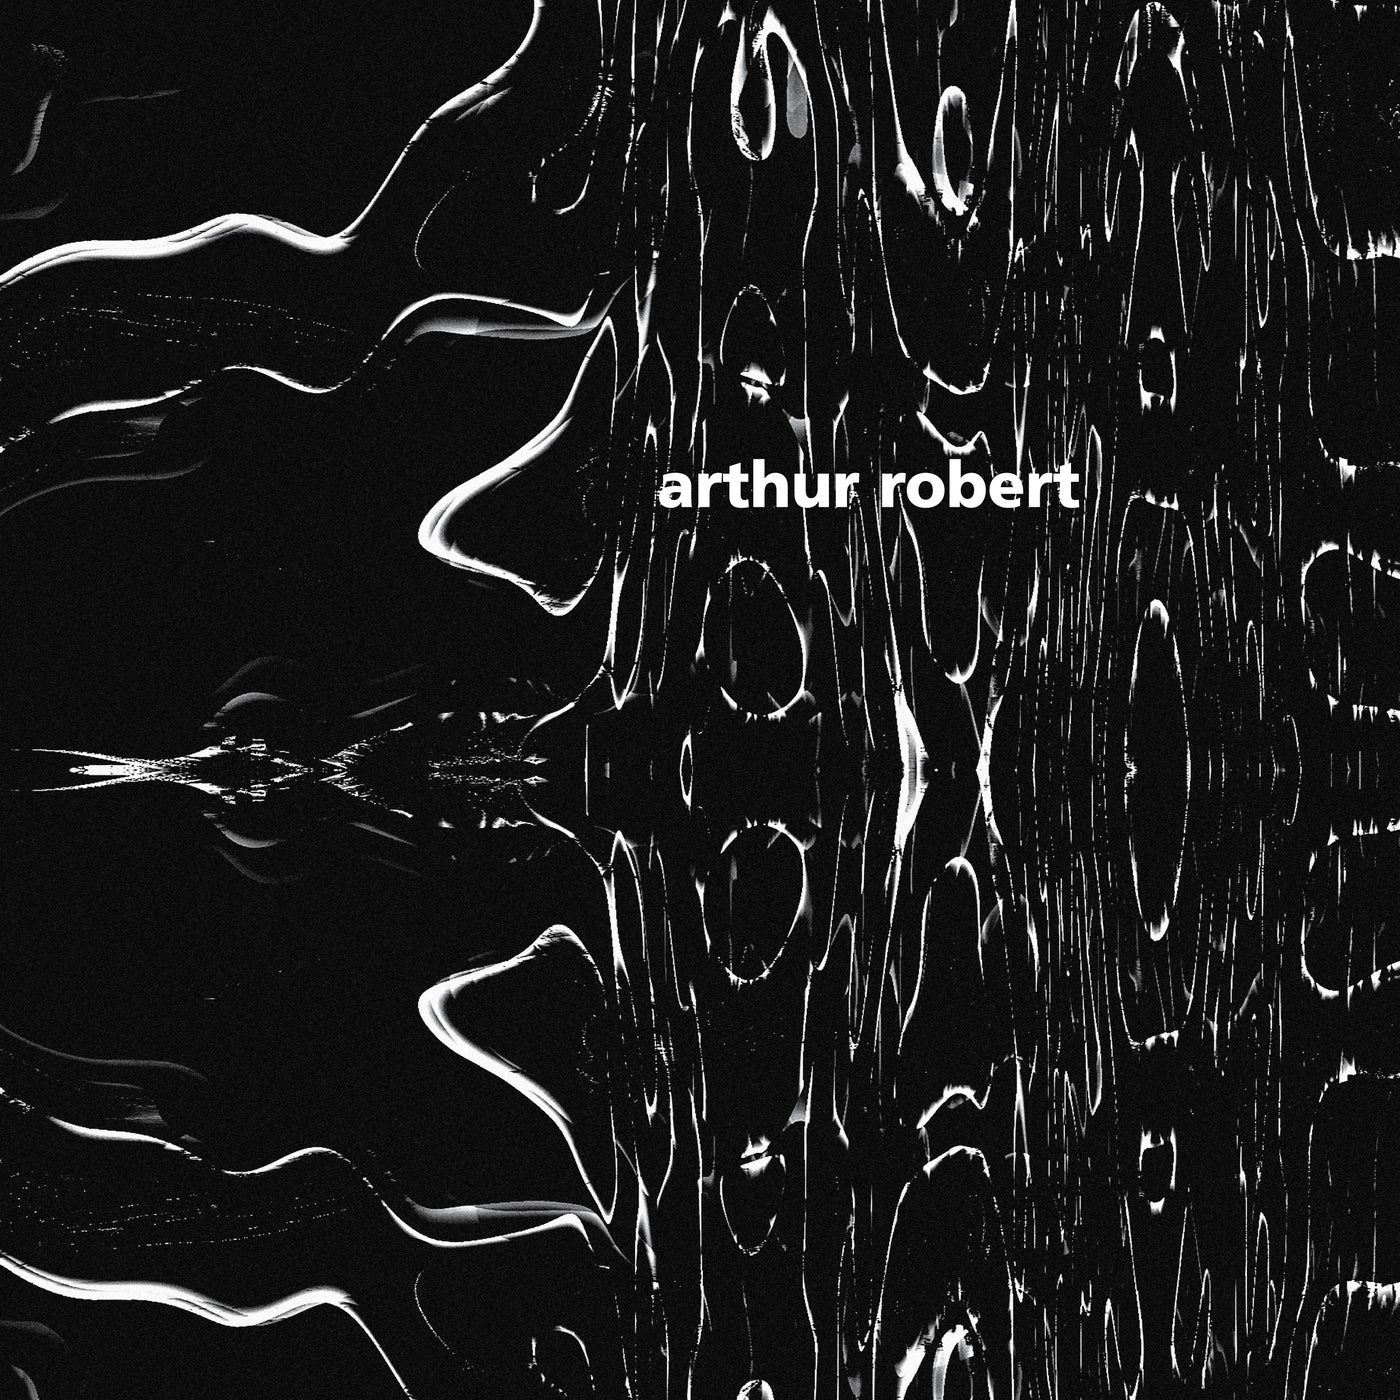 image cover: Arthur Robert, Naty Seres - Transition Part 2 / FIGUREX26